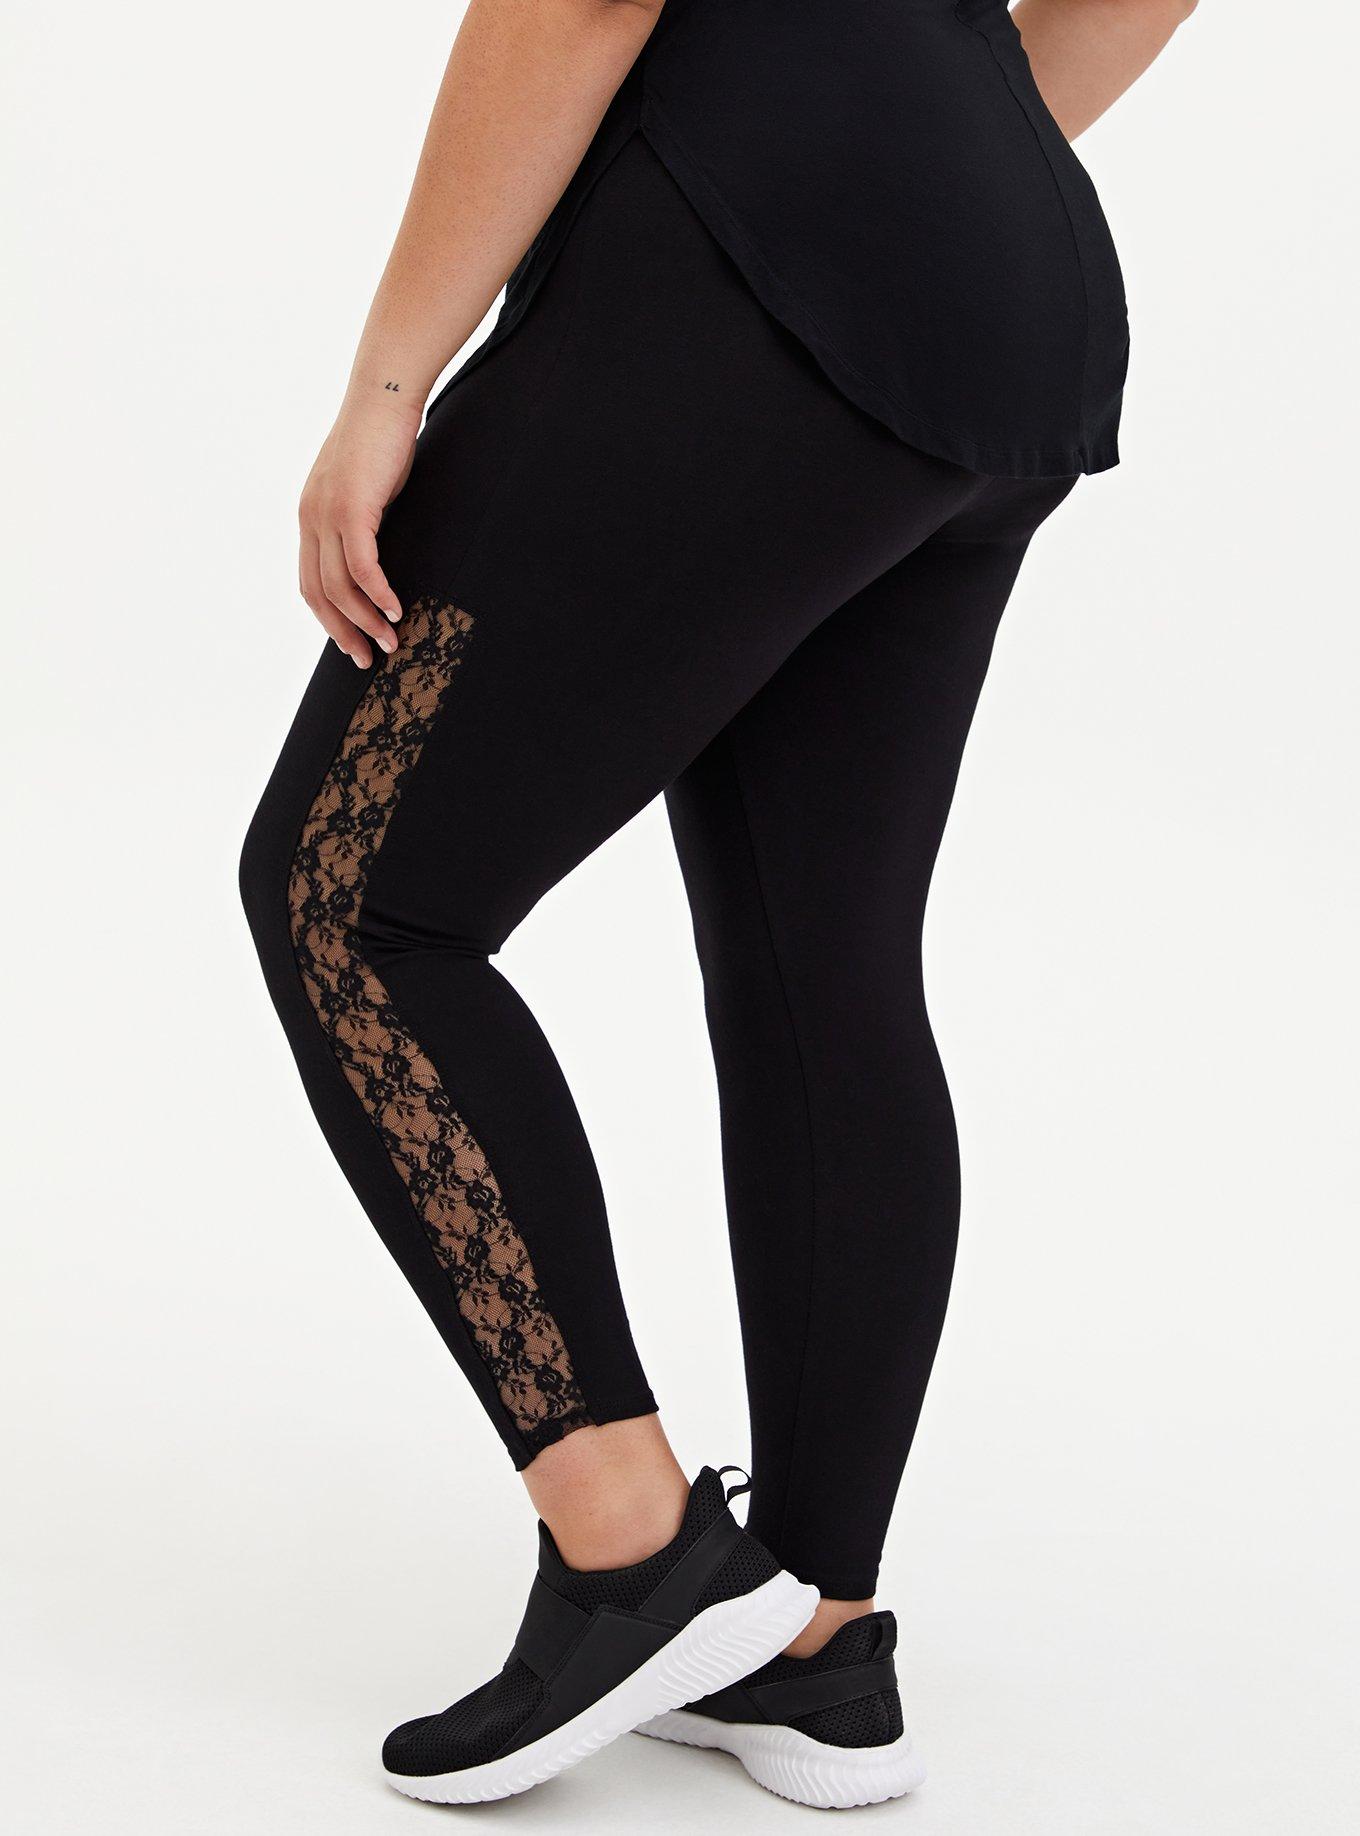 Plus Size - Premium Leggings - Lace Sides Black - Torrid